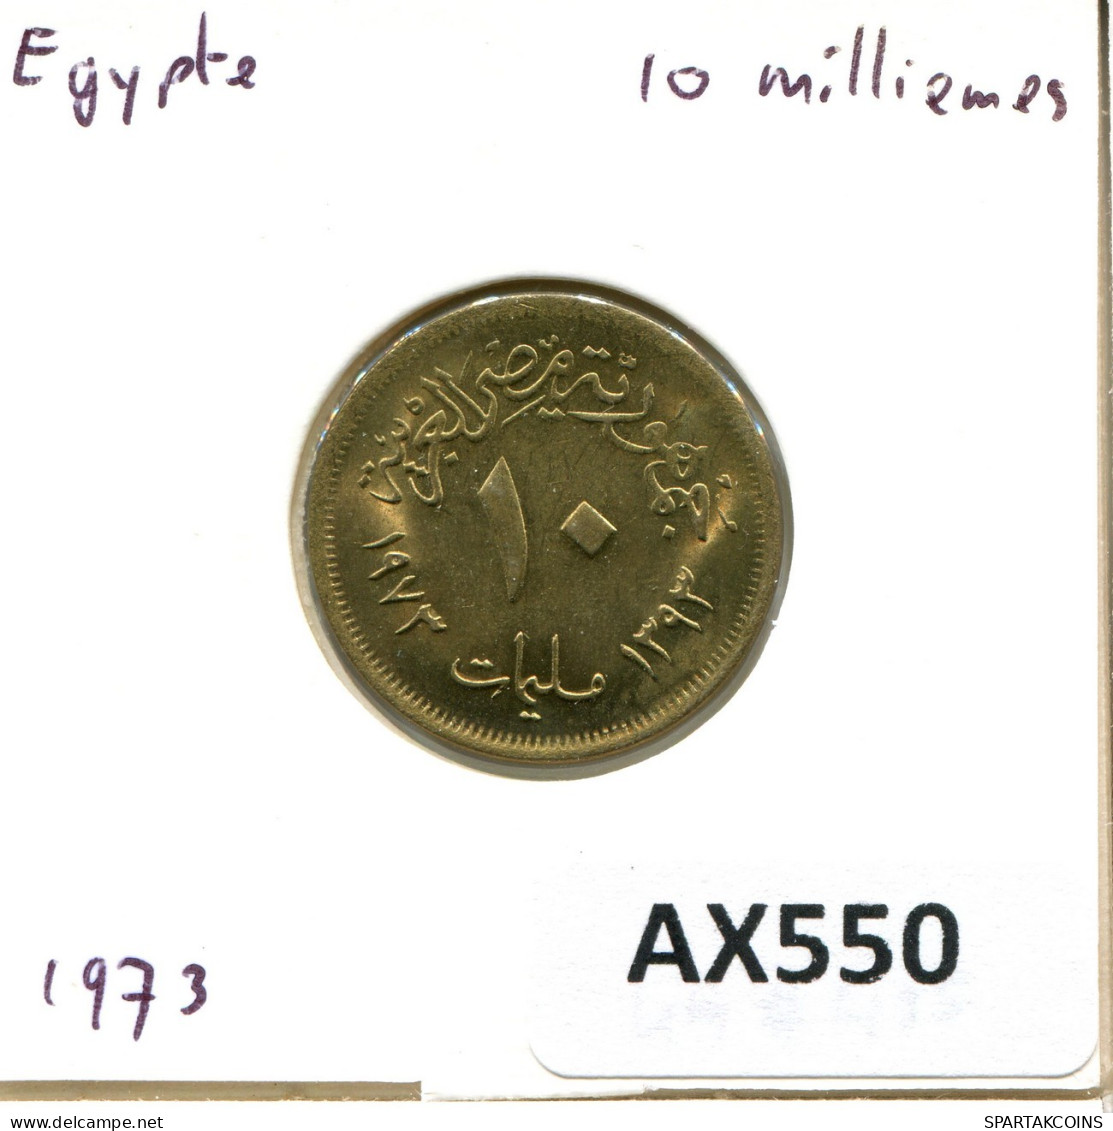 10 MILLIEMES 1973 ÄGYPTEN EGYPT Islamisch Münze #AX550.D.A - Egypt